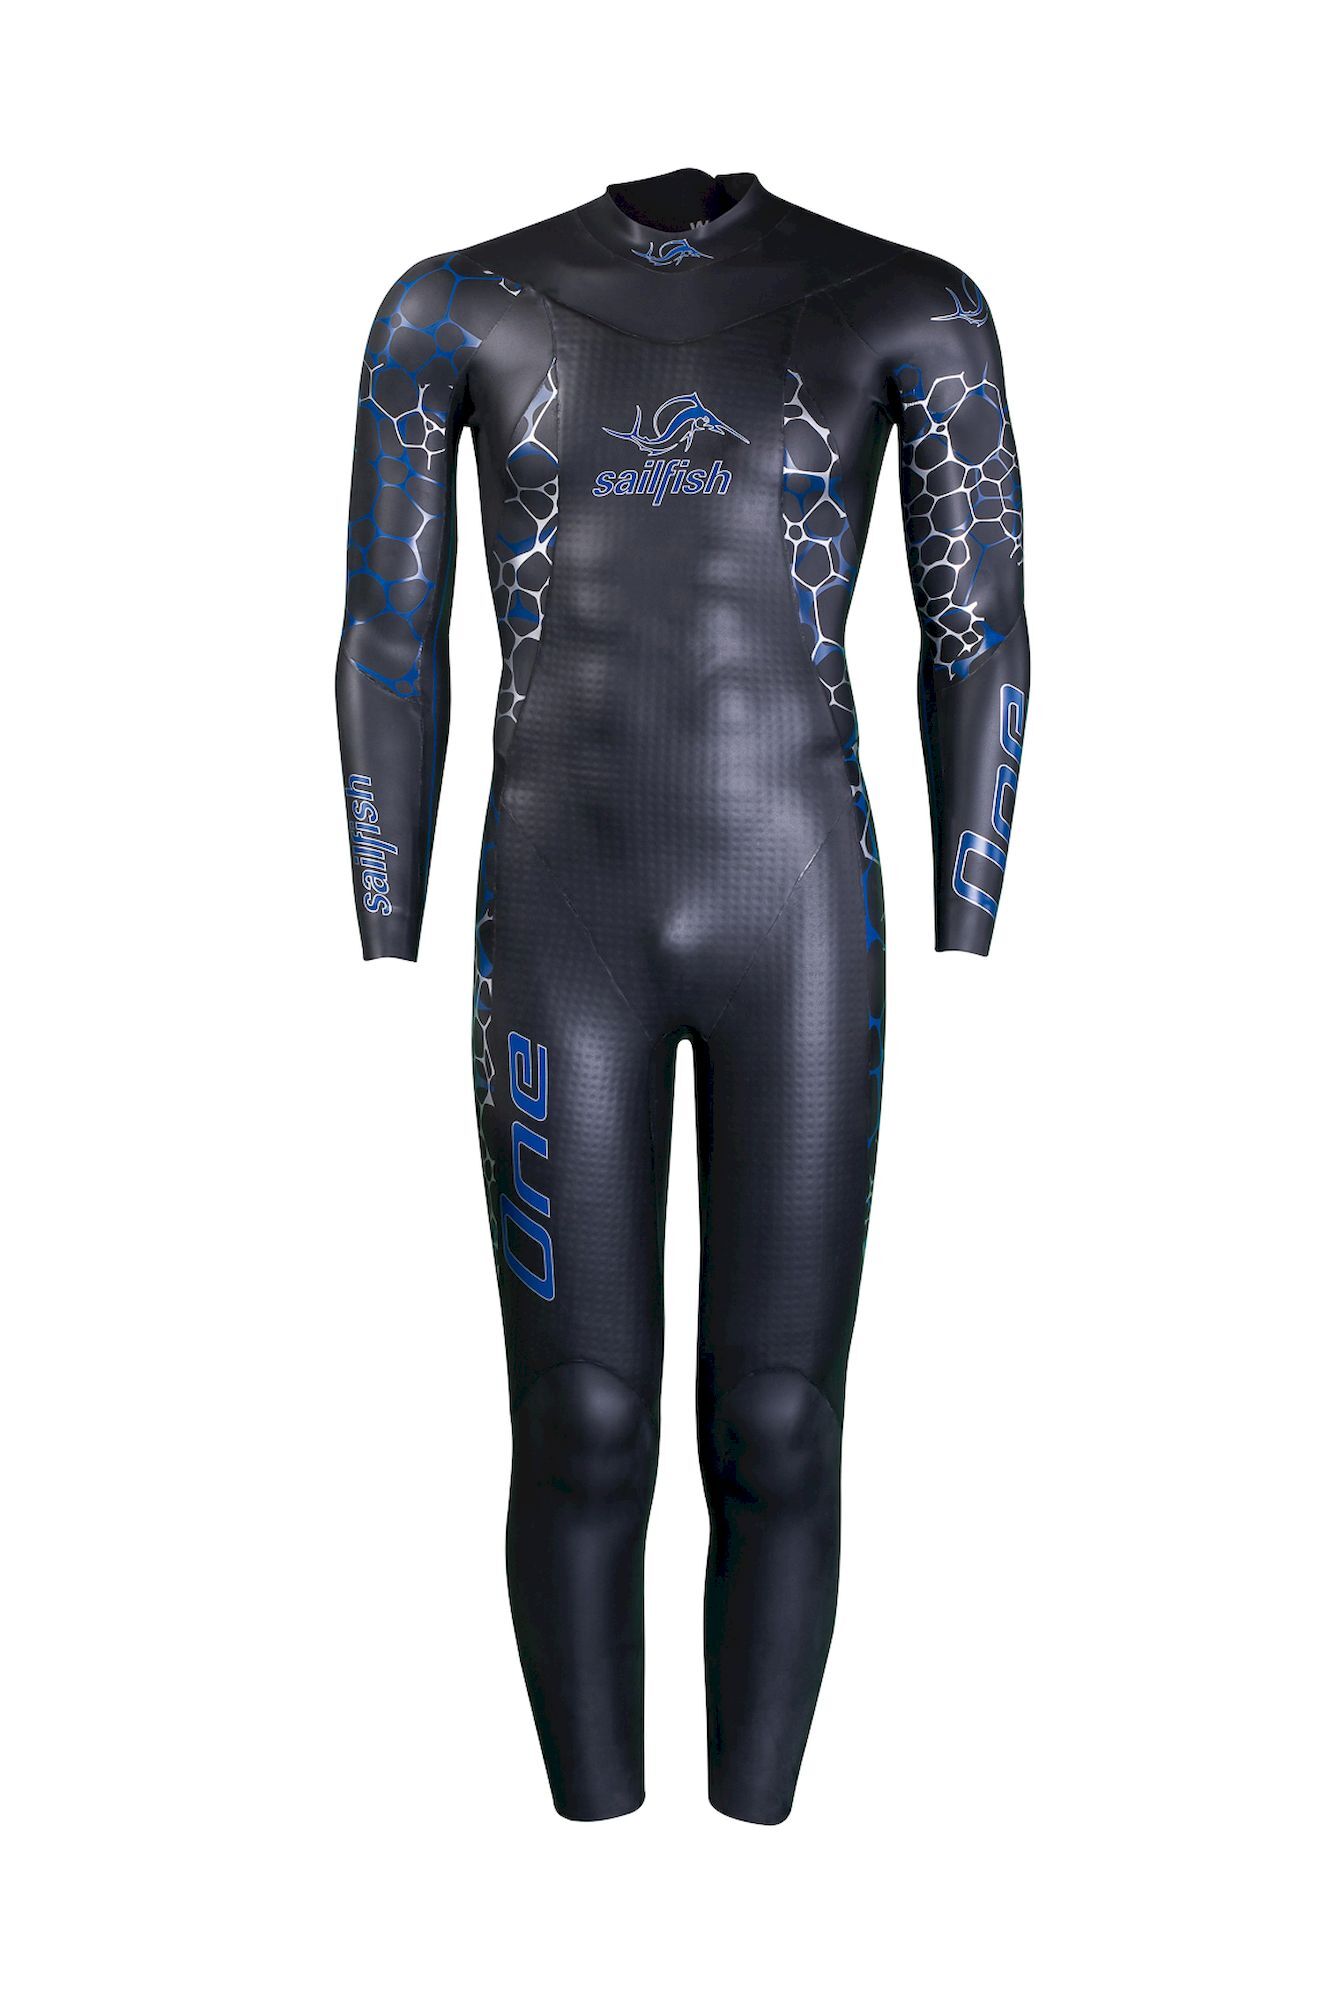 Sailfish Wetsuit Mens One 7 - Trajes de neopreno - Hombre